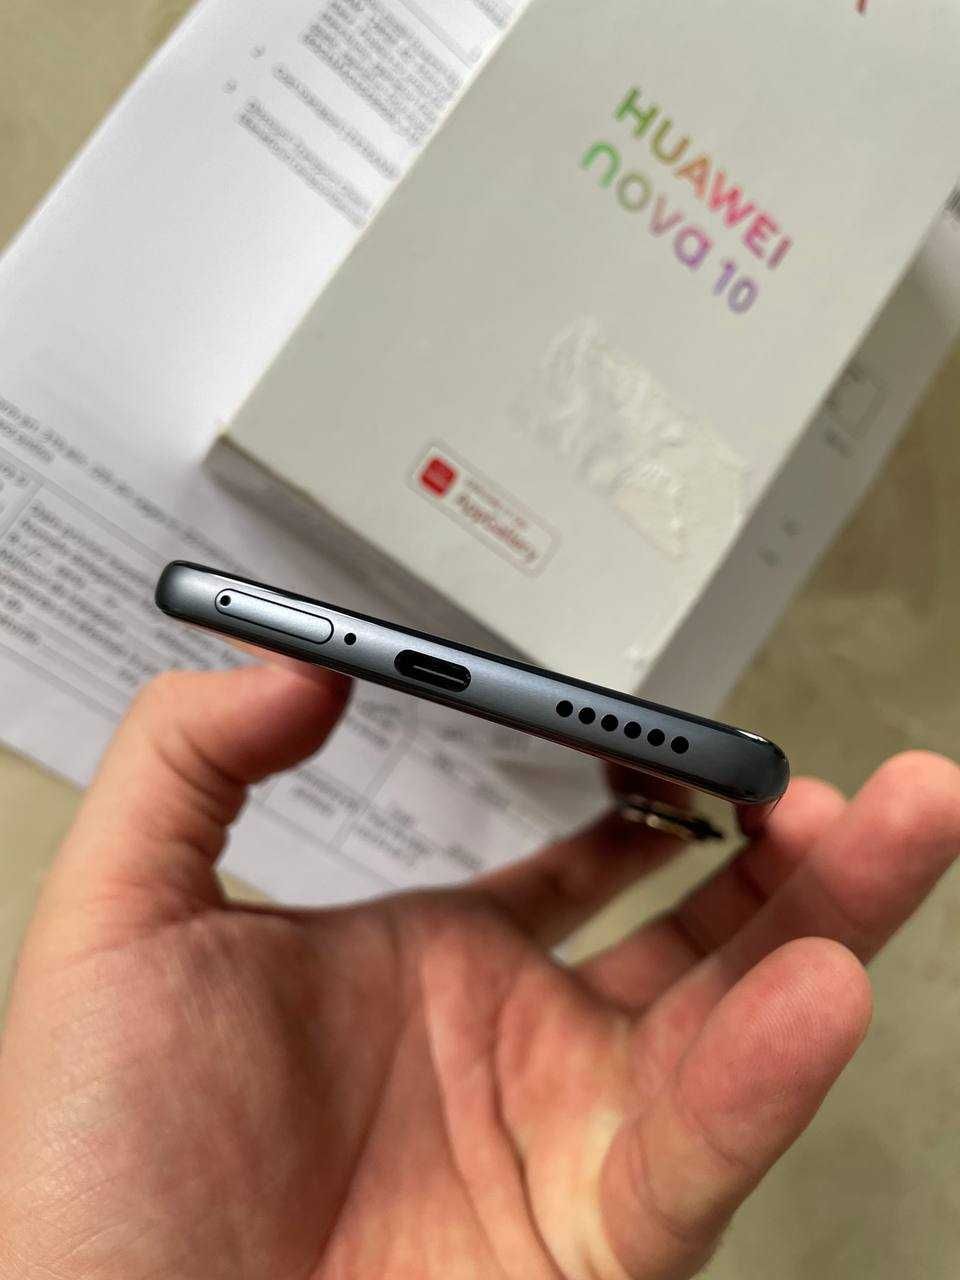 Huawei Nova 10, Dual SIM, 8GB RAM, 128GB, 4G, Starry Black Garantie